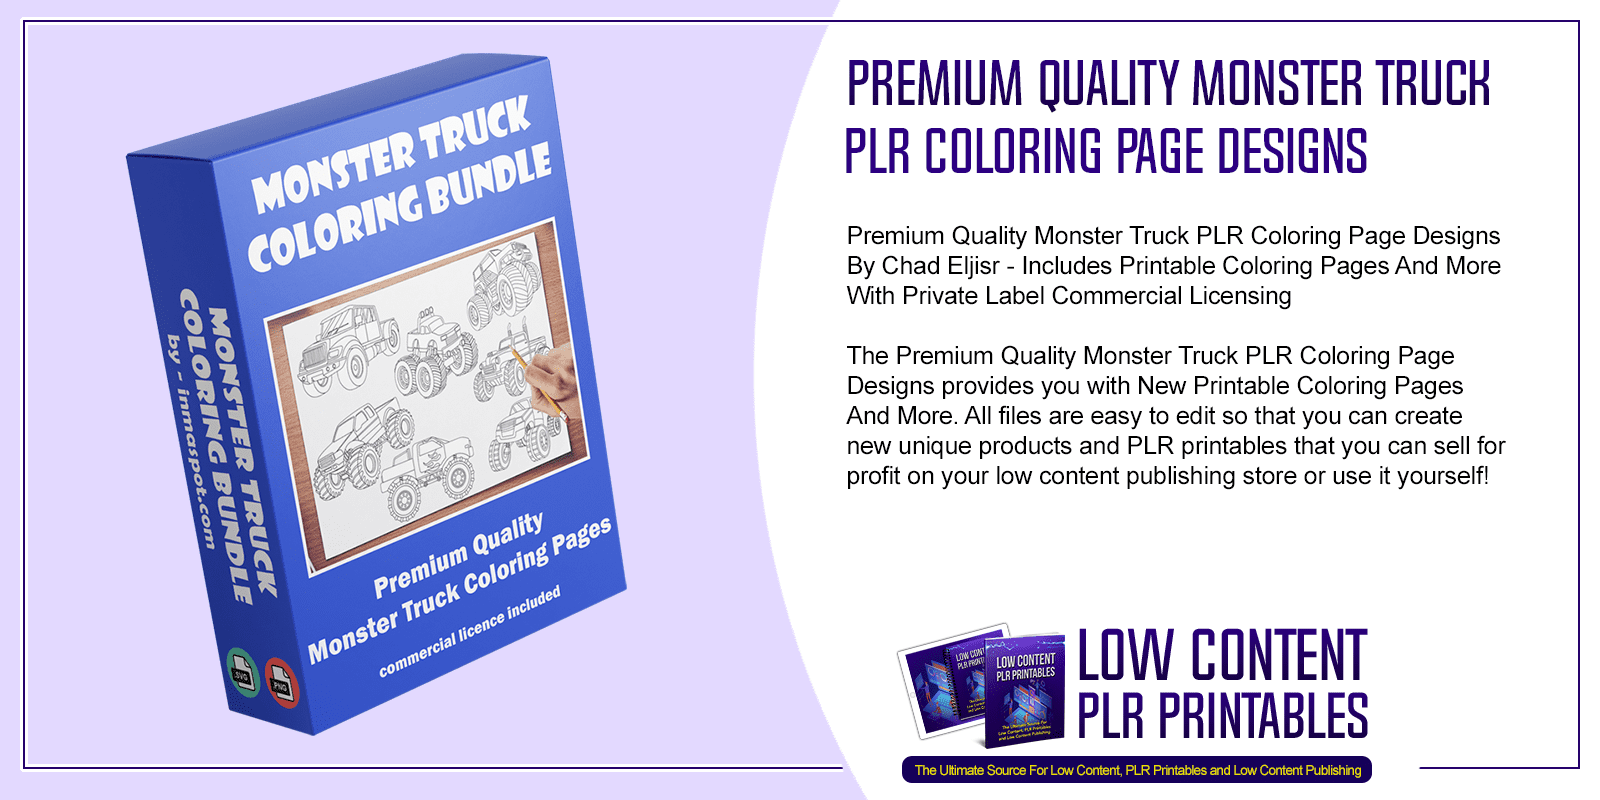 Premium quality monster truck plr coloring page designs plr pages